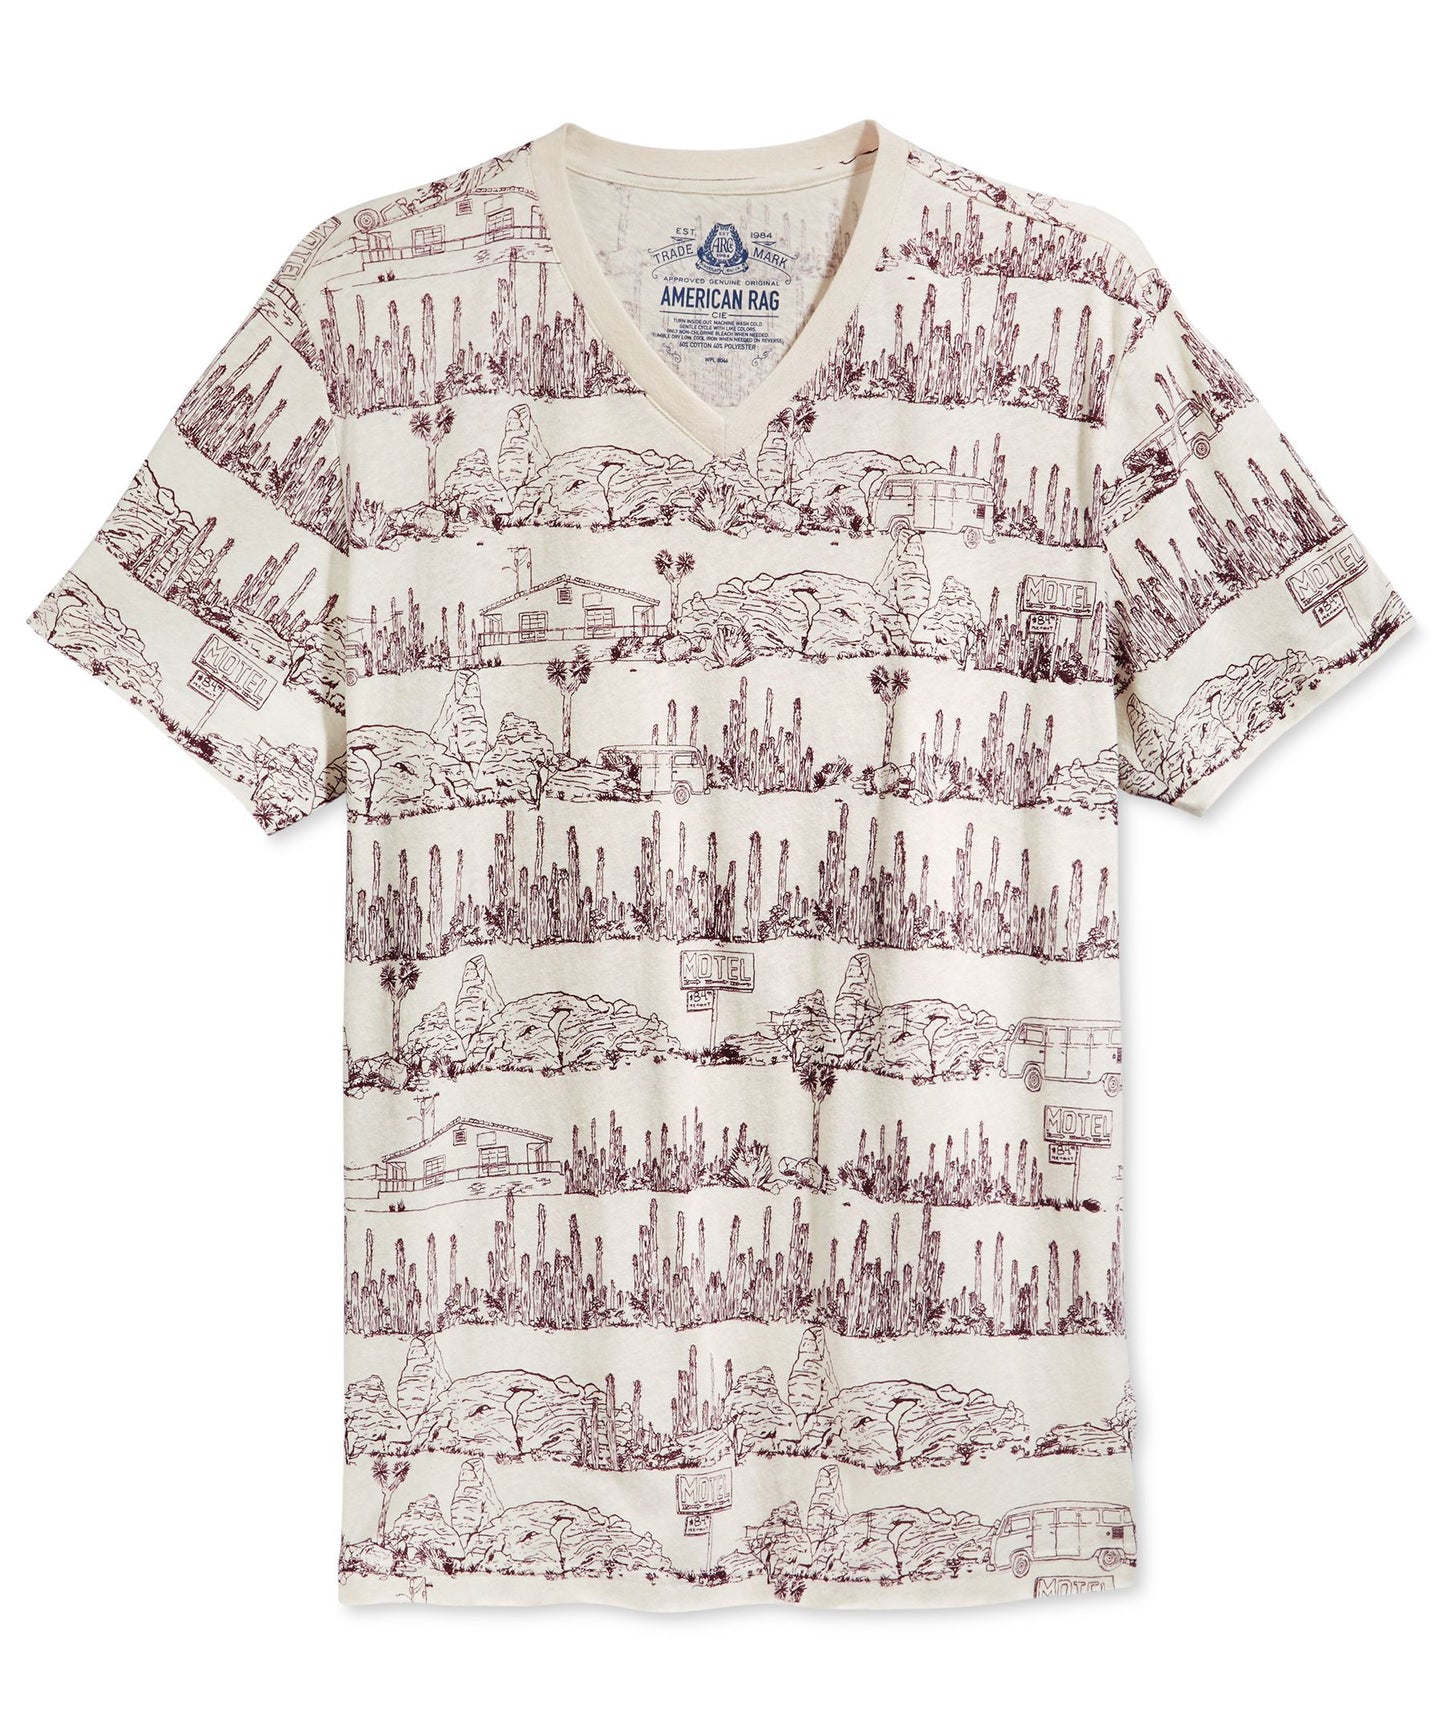 American Rag  Landscape T-Shirt